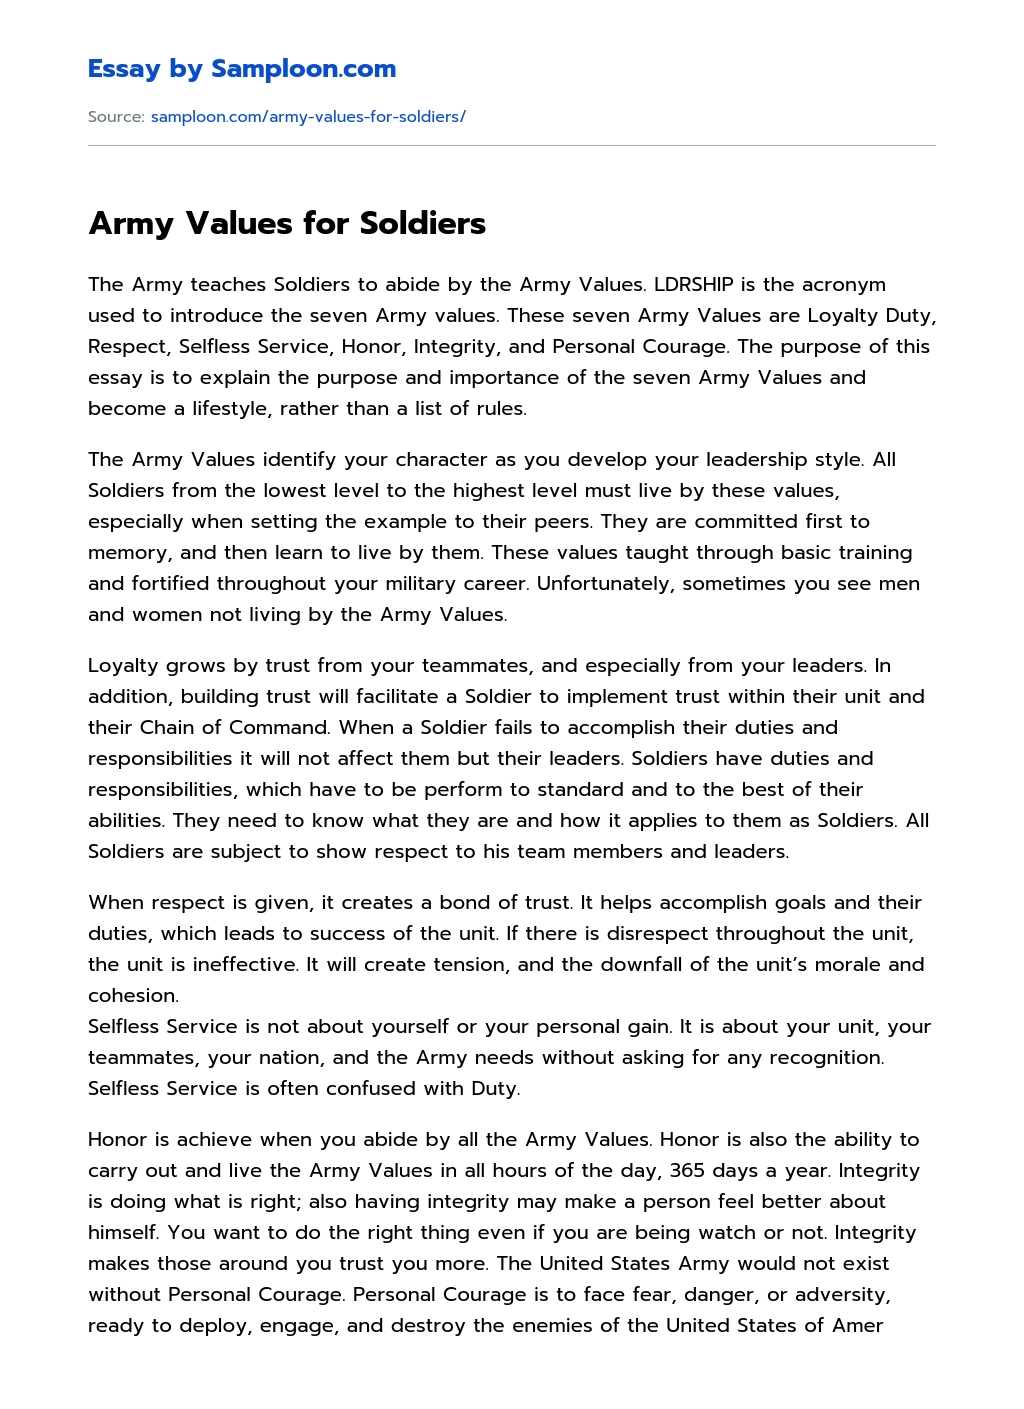 army values blc informative essay